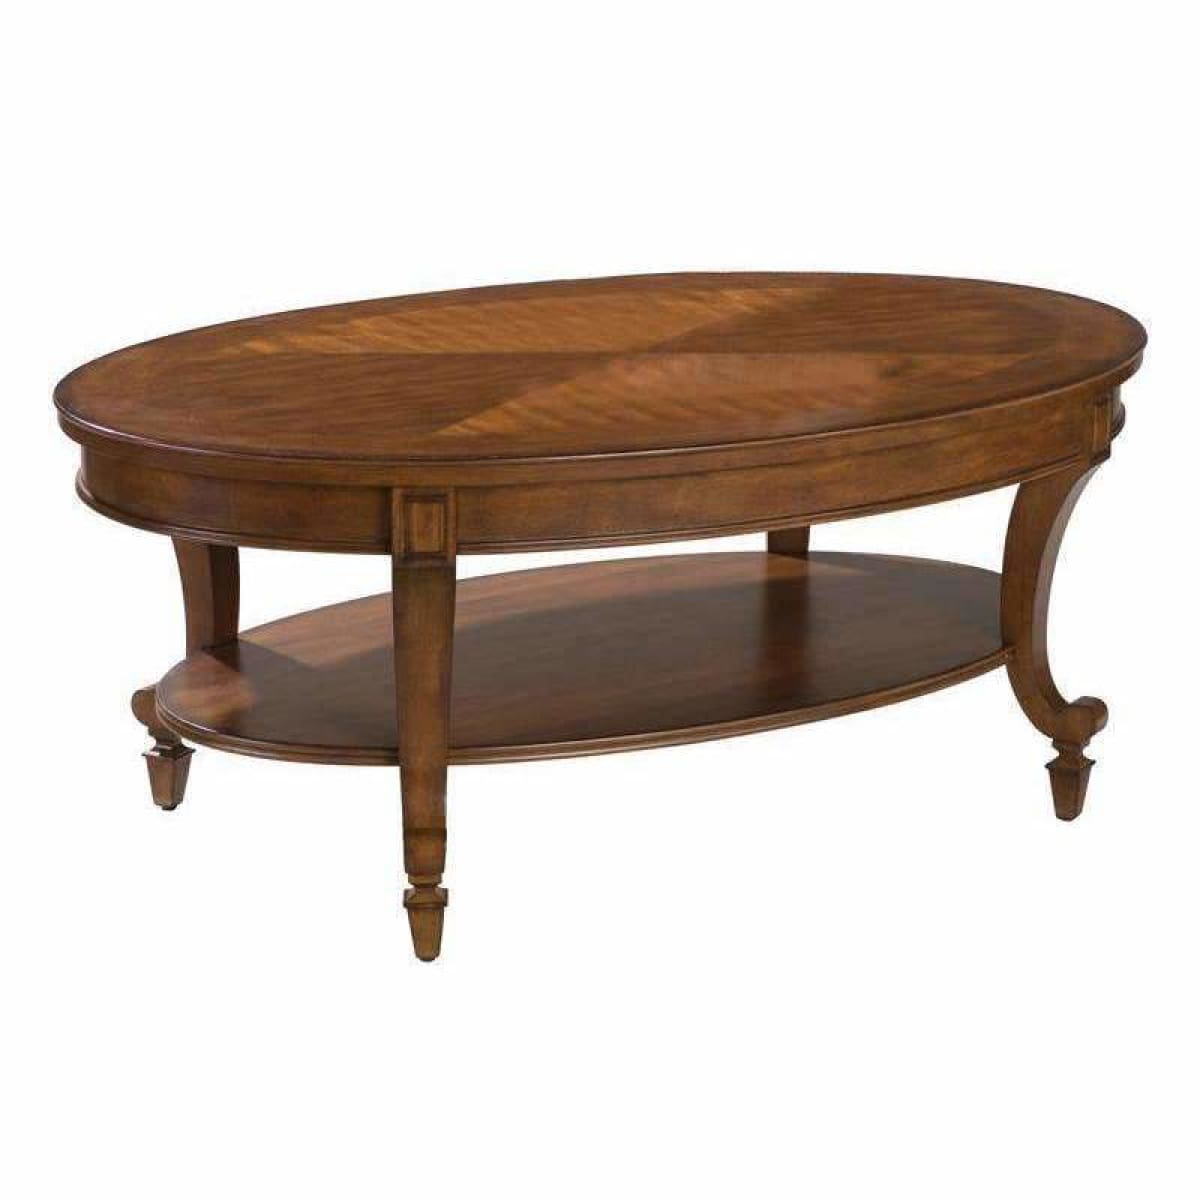 Furniture Barn - Aidan Oval Cocktail Table